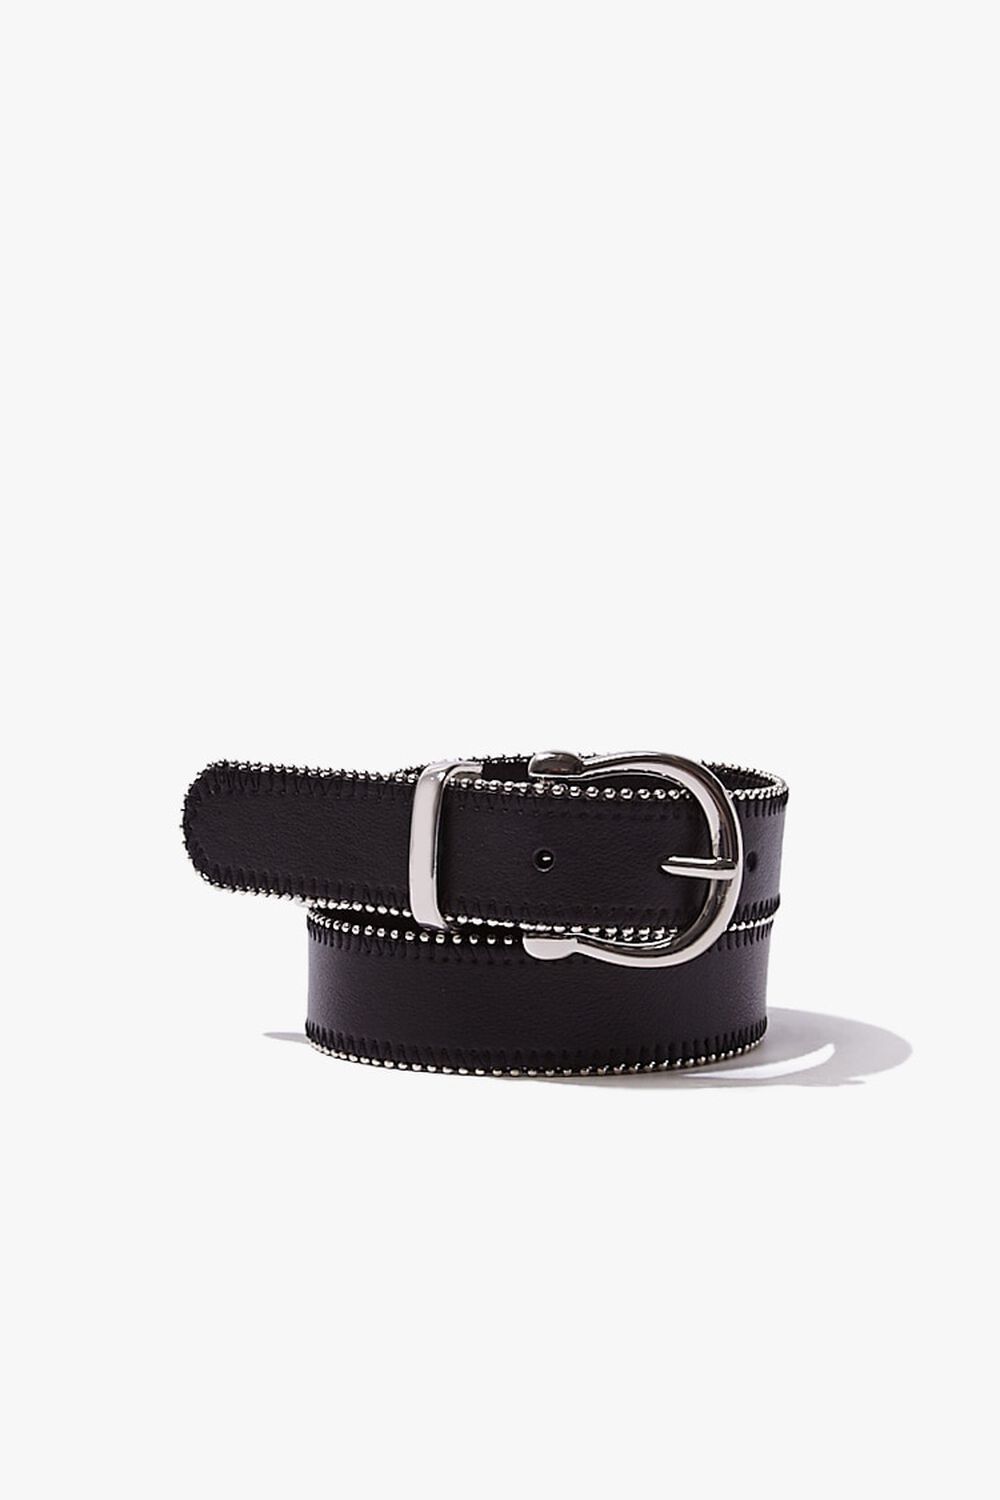 Studded Faux Leather Belt, image 1